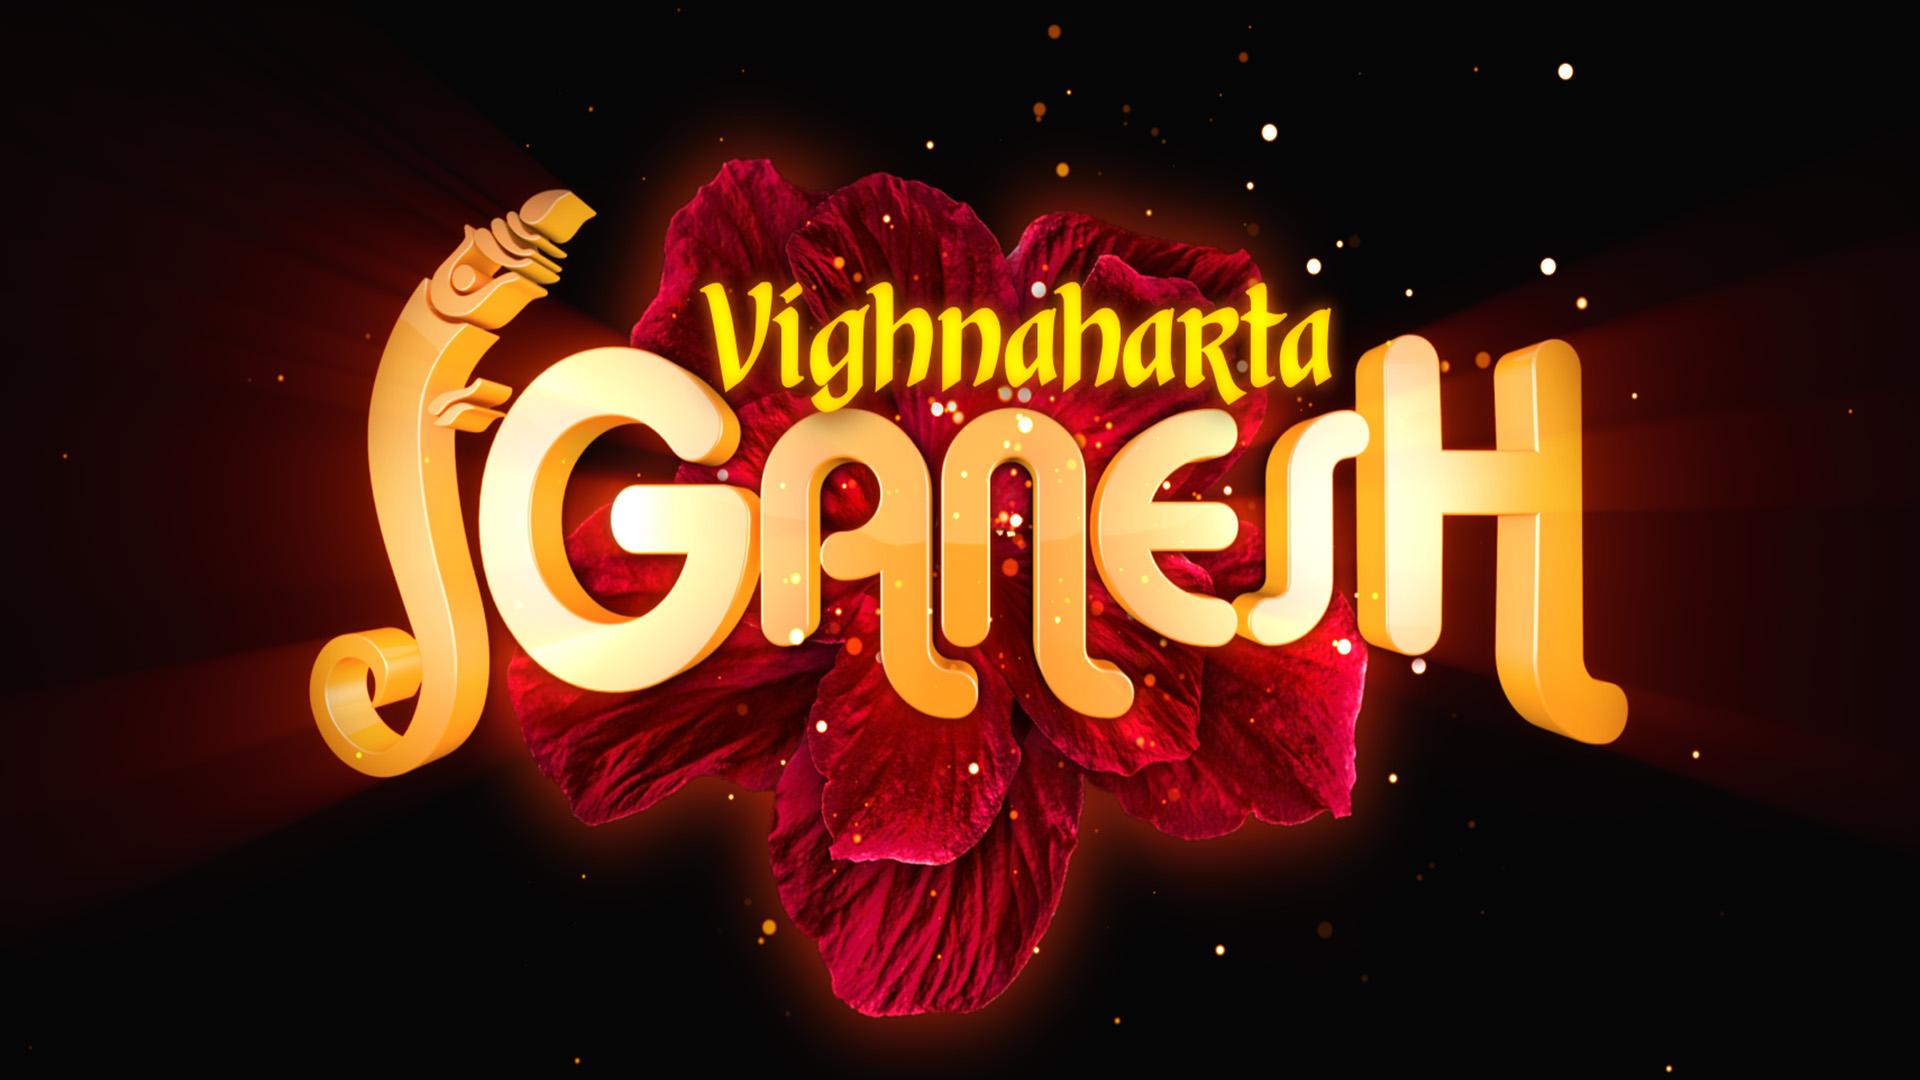 Vighnaharta Ganesh HD Wallpaper free download